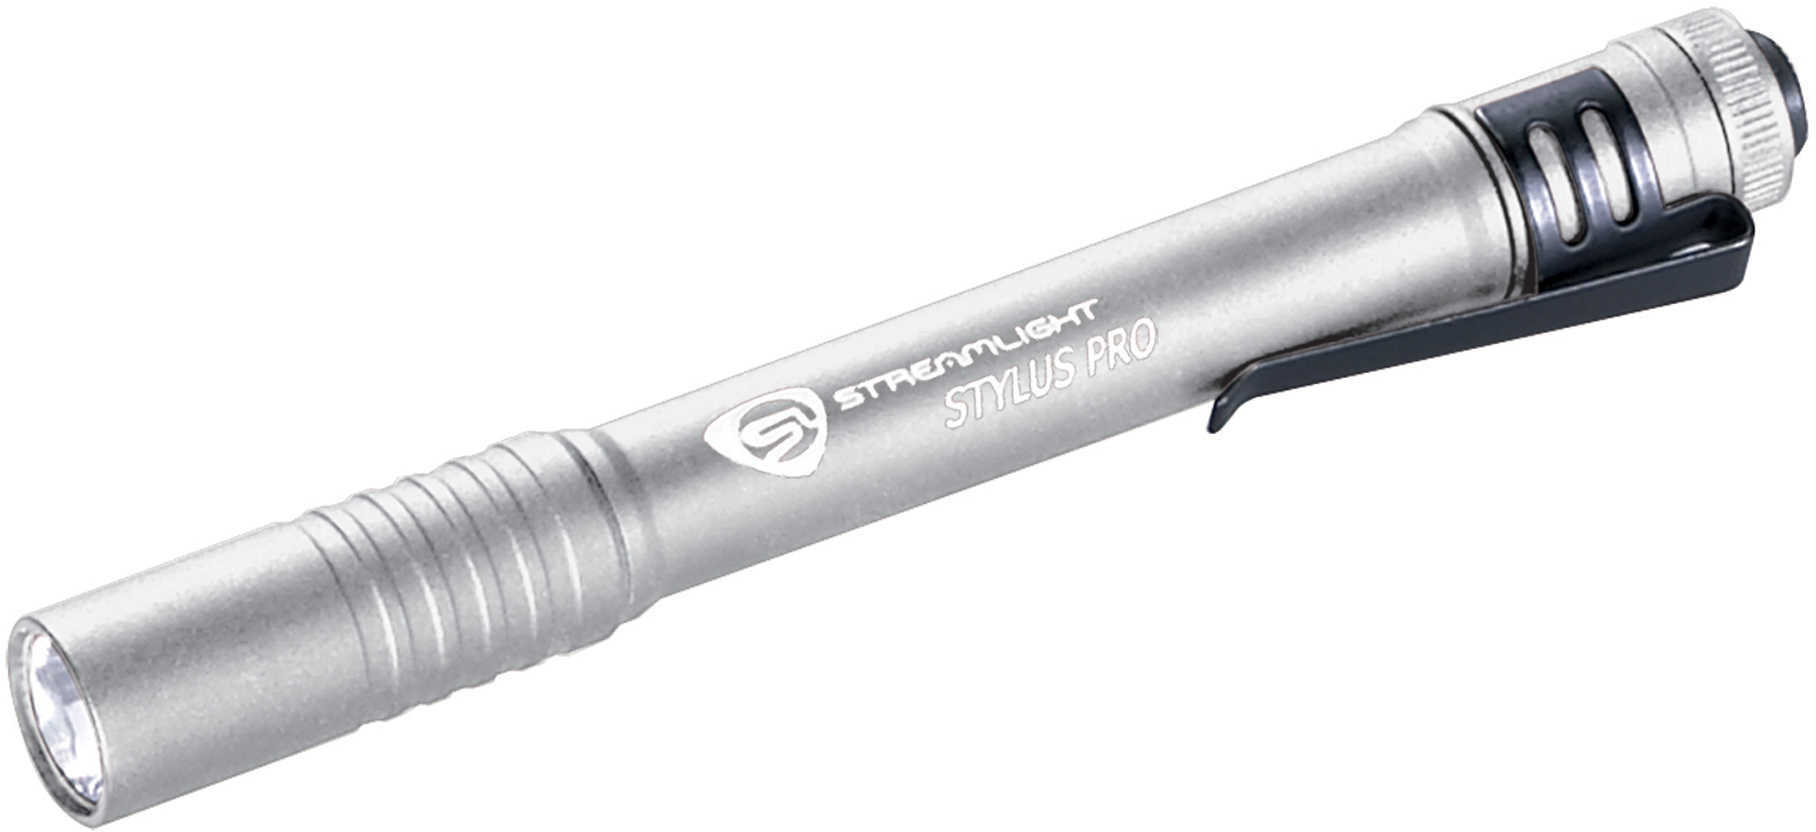 Streamlight Stylus Pro Silver 66121